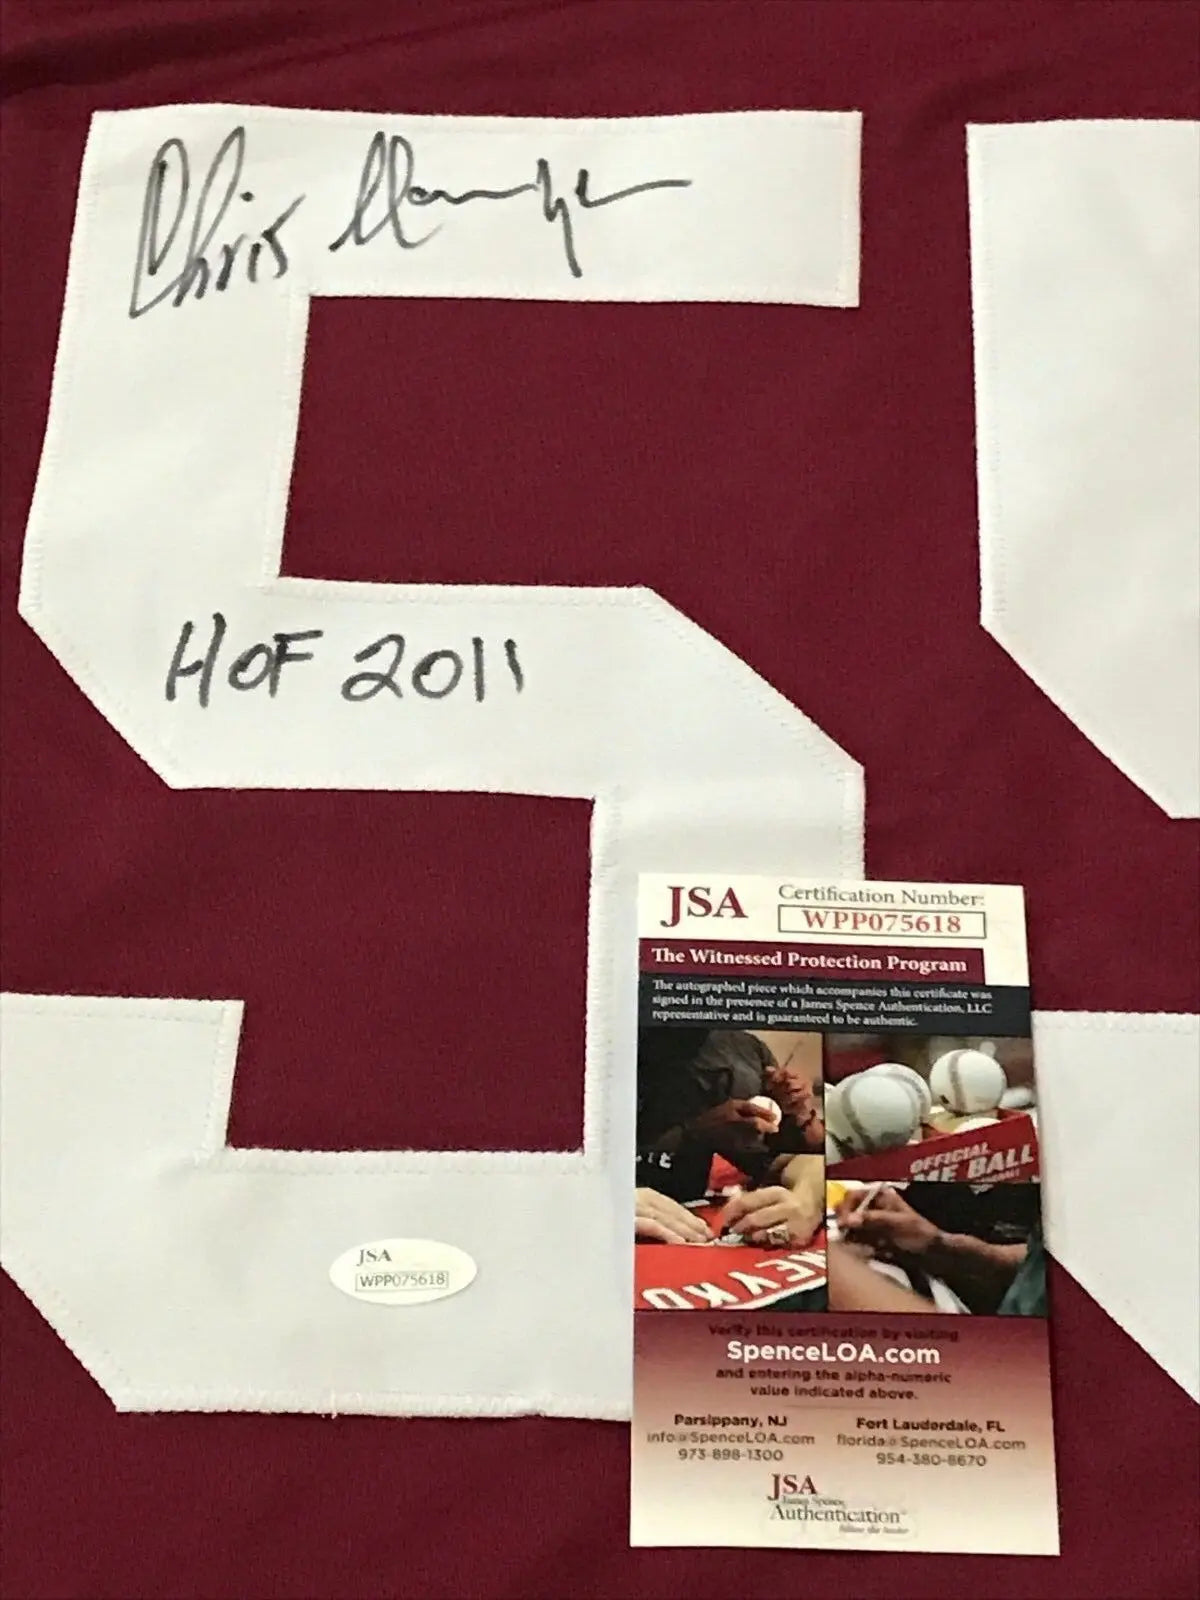 MVP Authentics Washington Football Chris Hanburger Autographed Signed Inscribed Jersey Jsa Coa 107.10 sports jersey framing , jersey framing